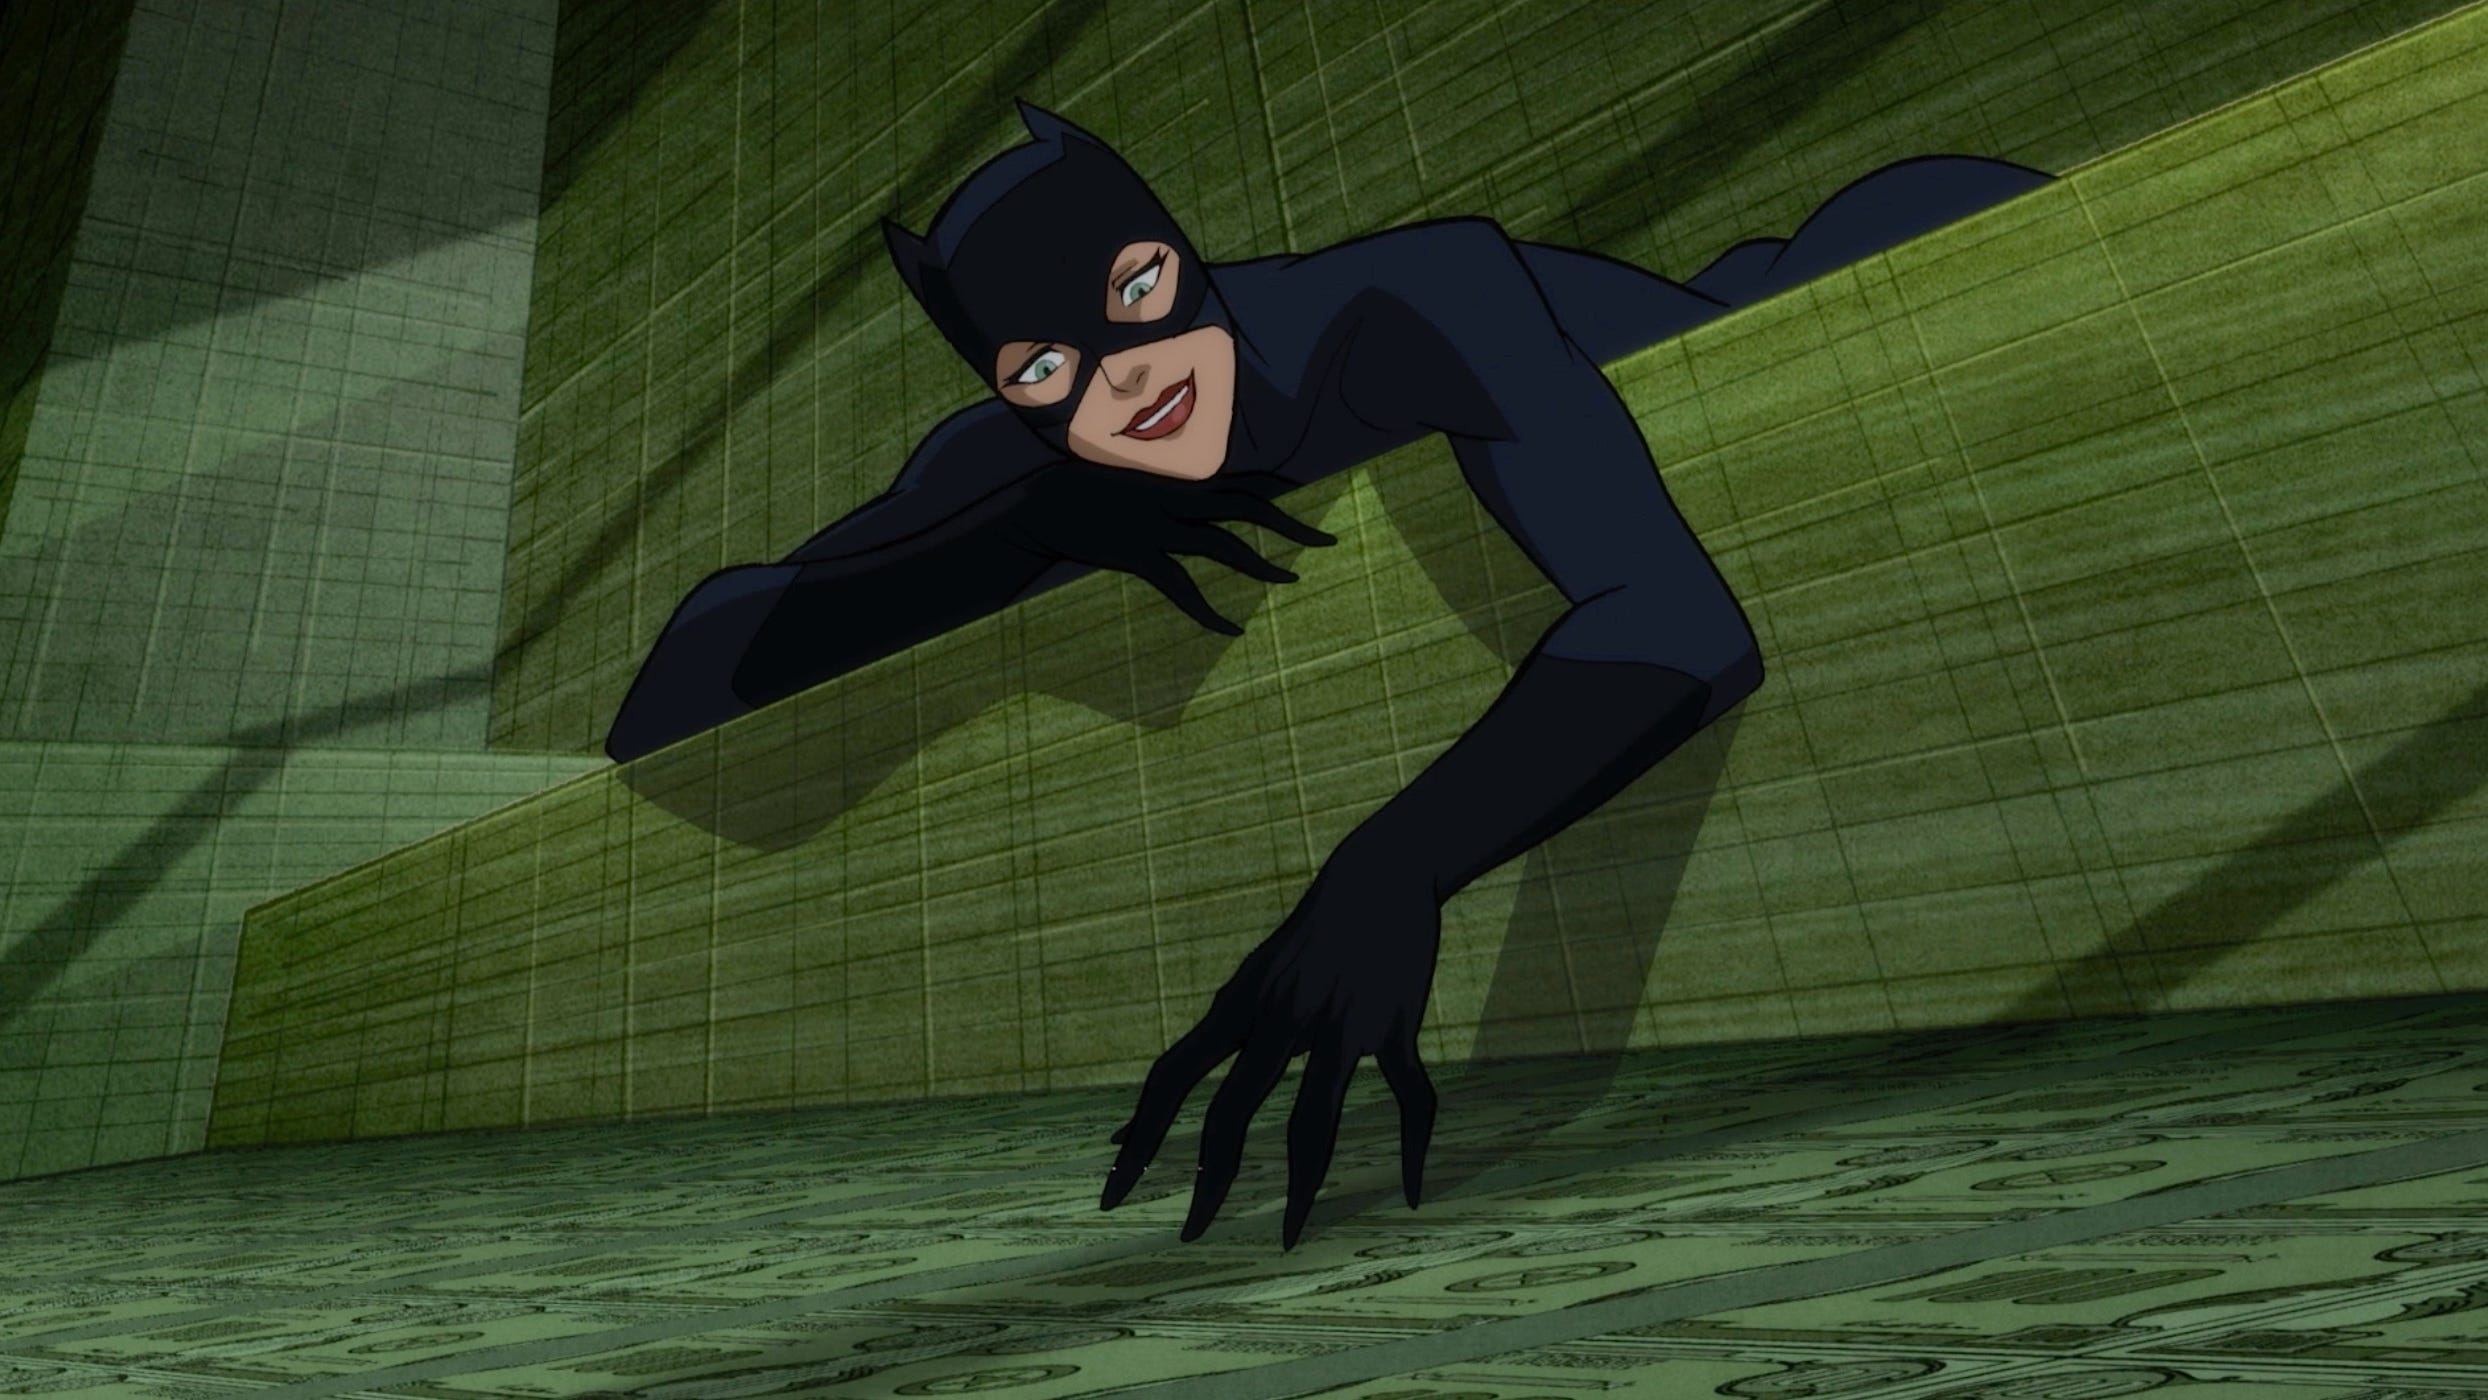 Exclusive: Naya Rivera's Catwoman has 'a little fun' in 'Batman' film